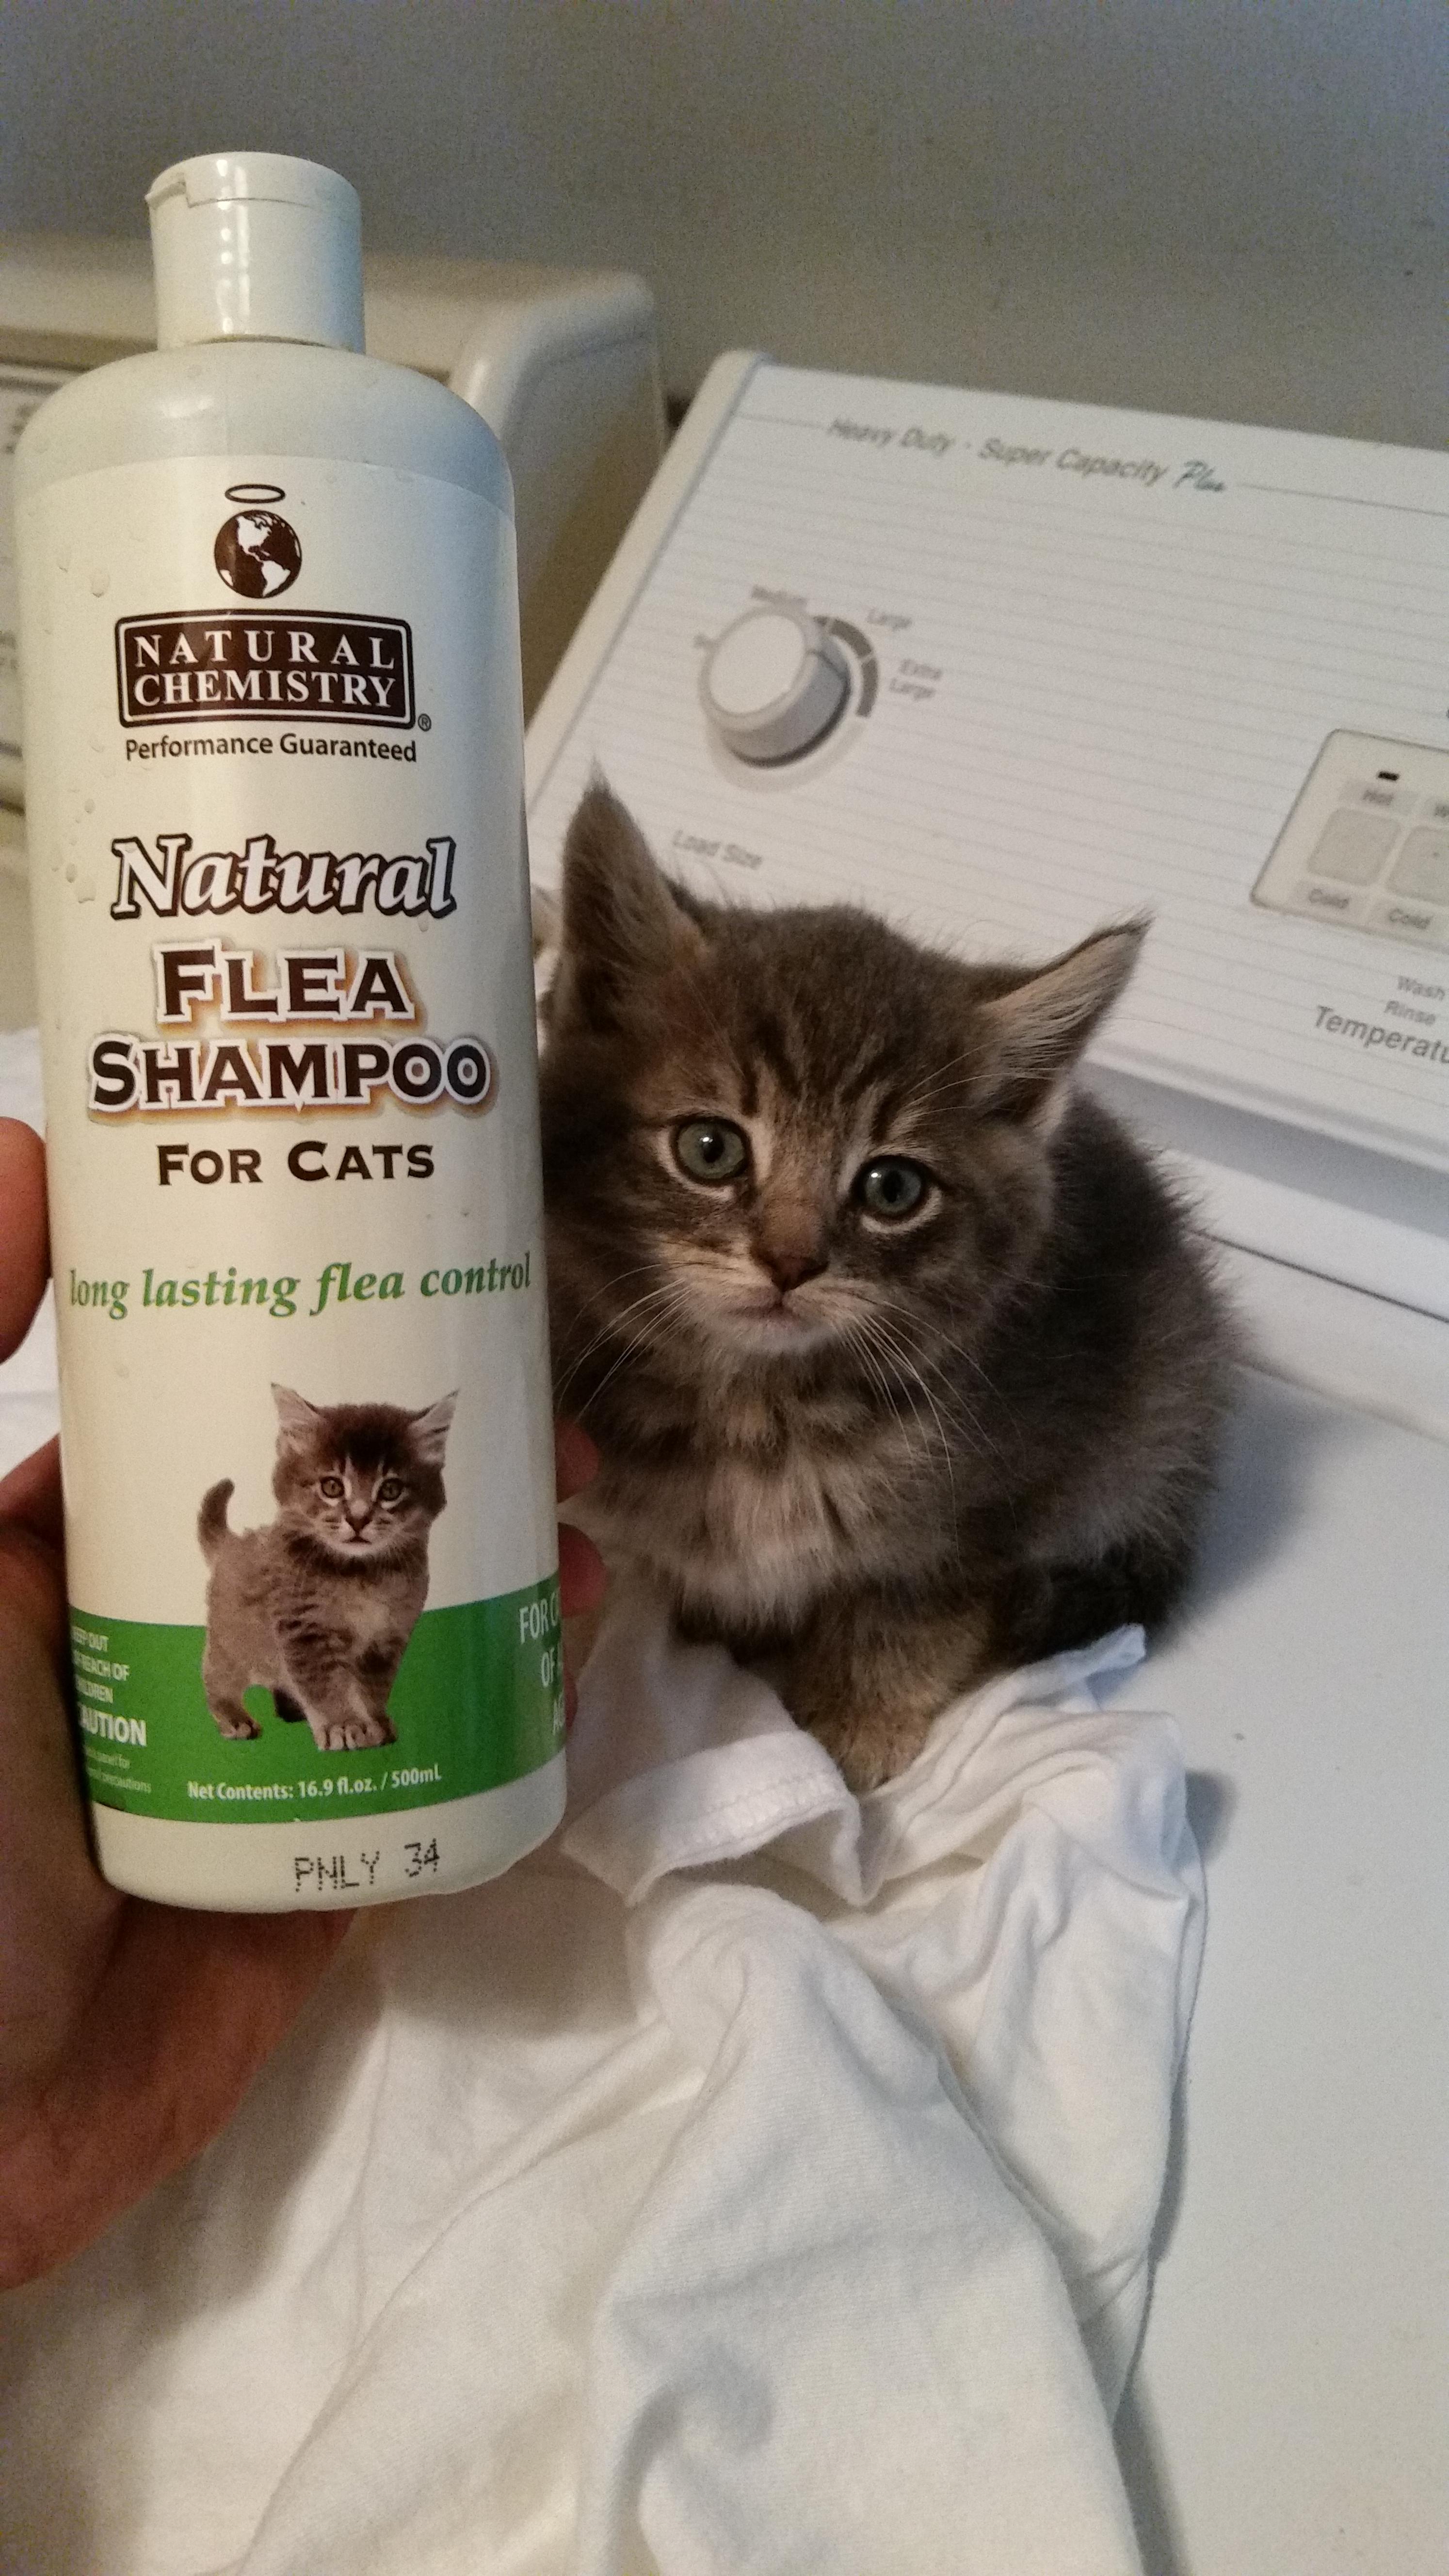 Flea - Natural Chemistry Natural Flea Shampoo For Cats On Ing lasting flea contri